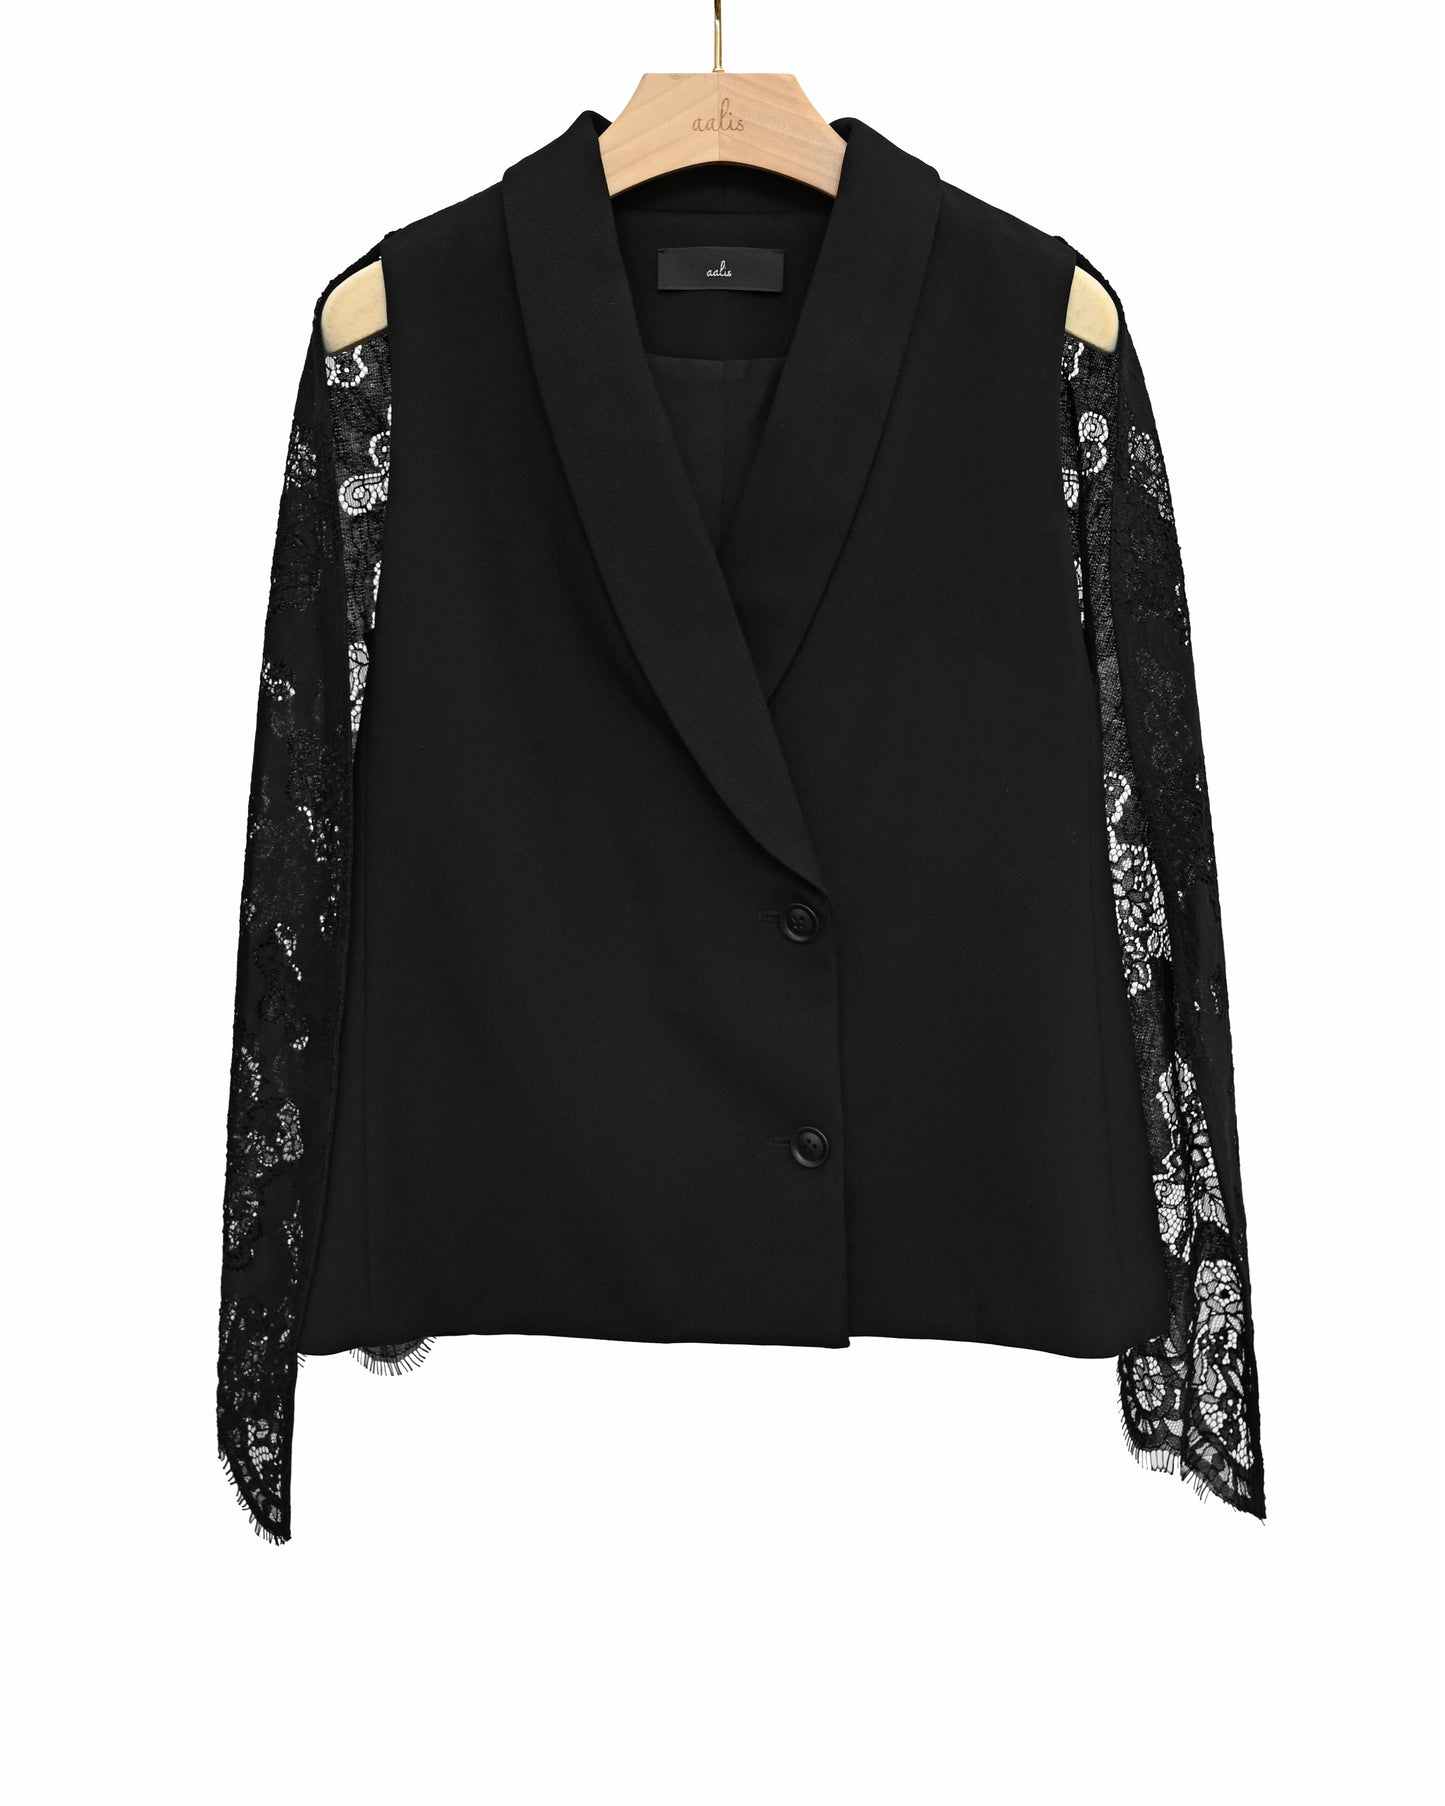 aalis OLGA cap lace blazer vest (Black)